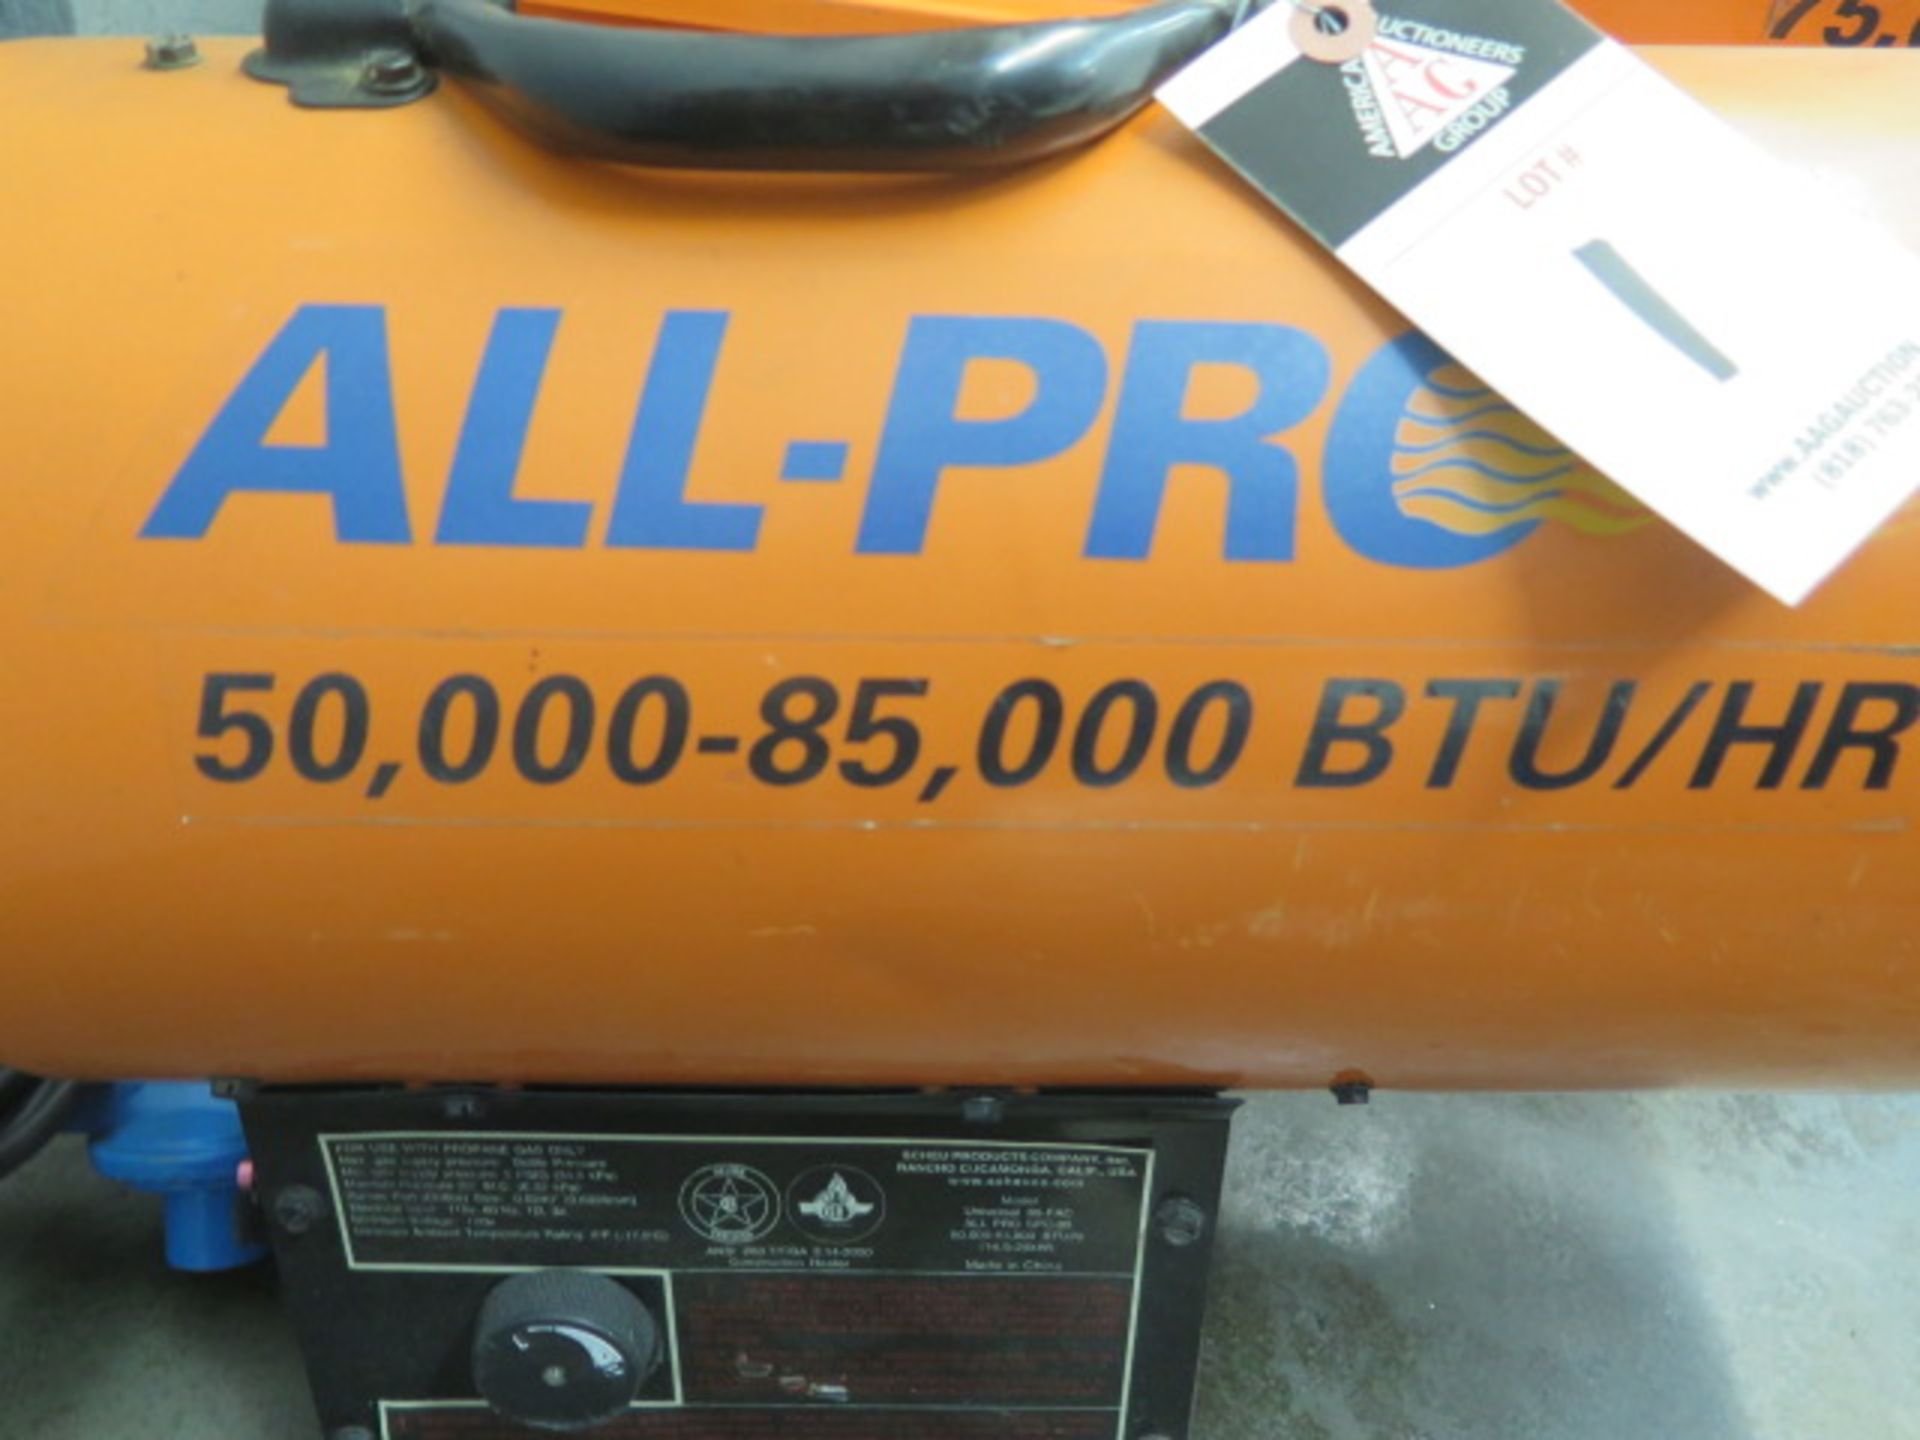 All-Pro 50,000-85,000 BTU Propane Fired Heater - Image 2 of 2